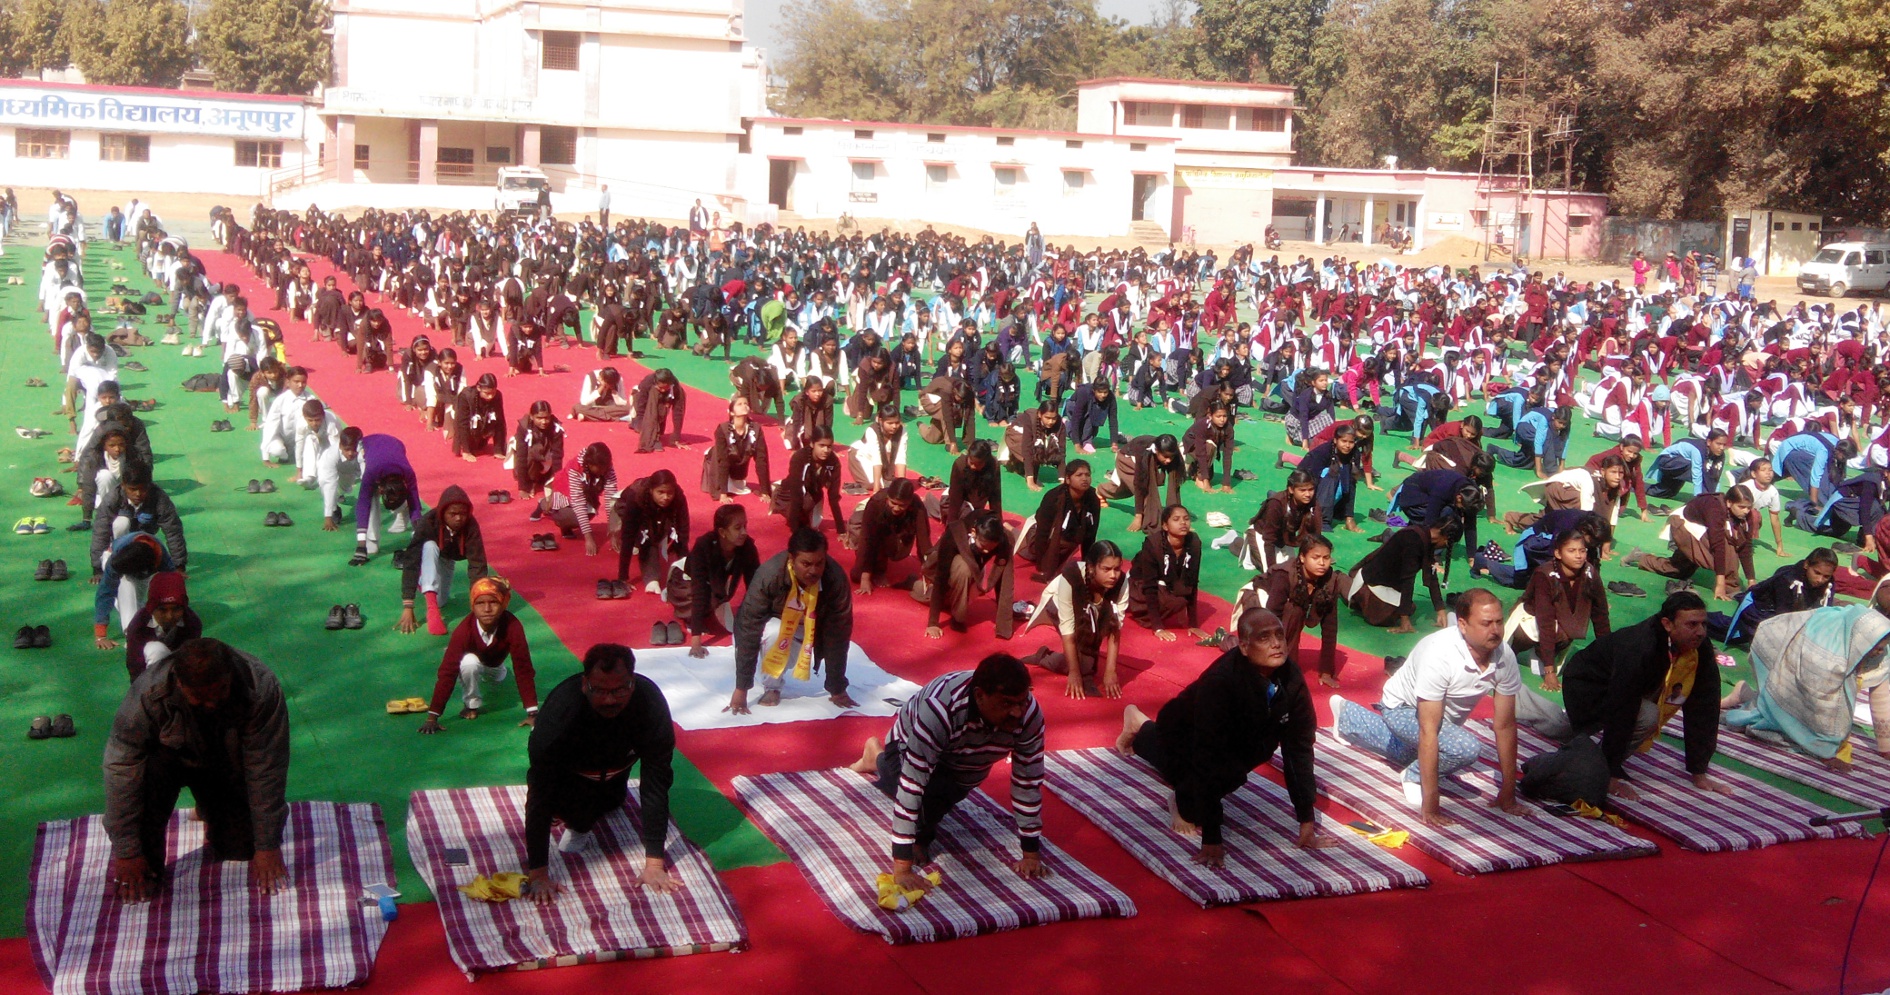 The students also accompanied the Surya Namaskar